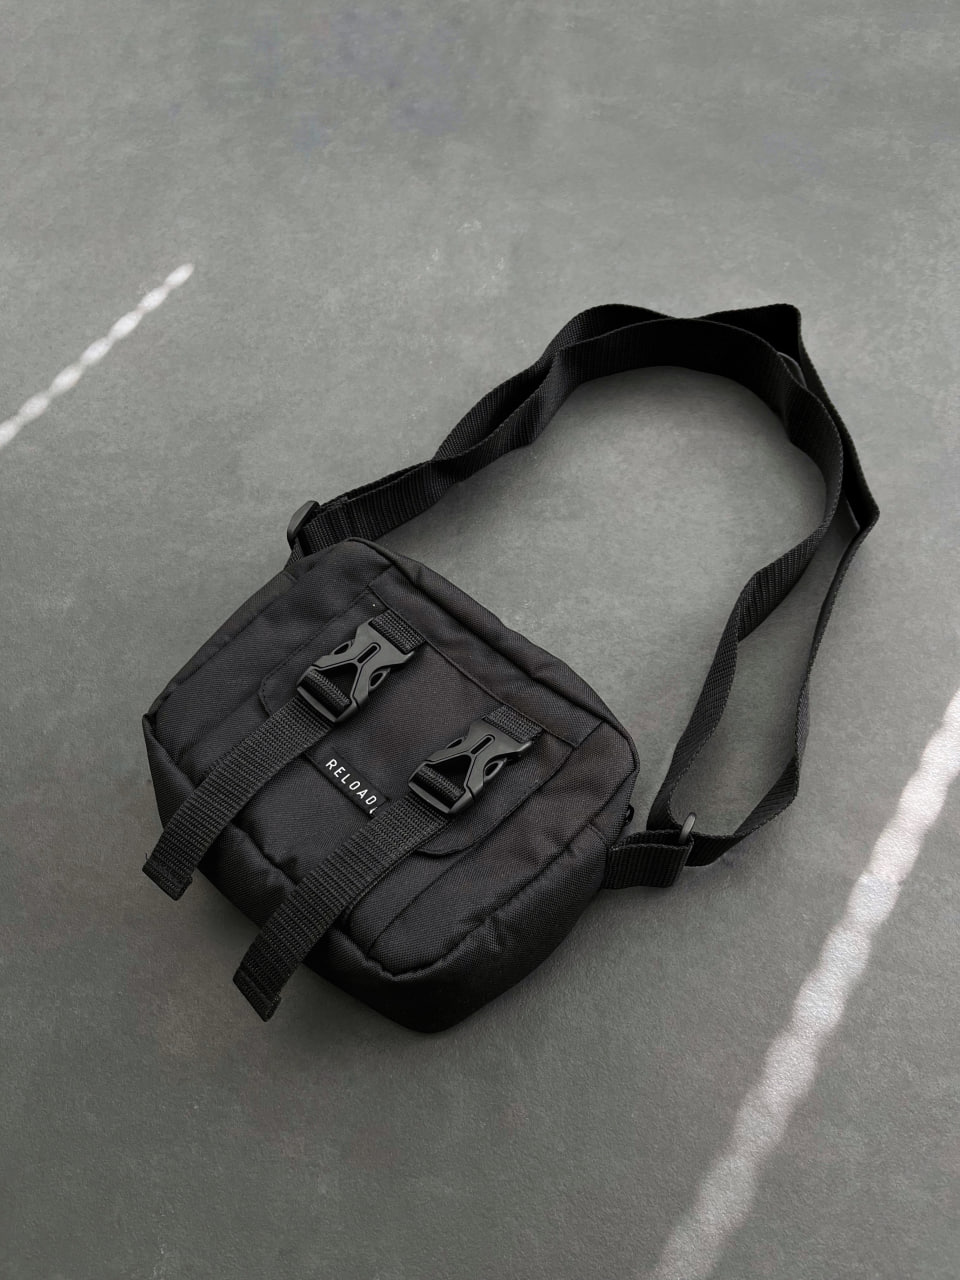 Месенджер (сумка) з фастексом Reload, чорний - Фото 4